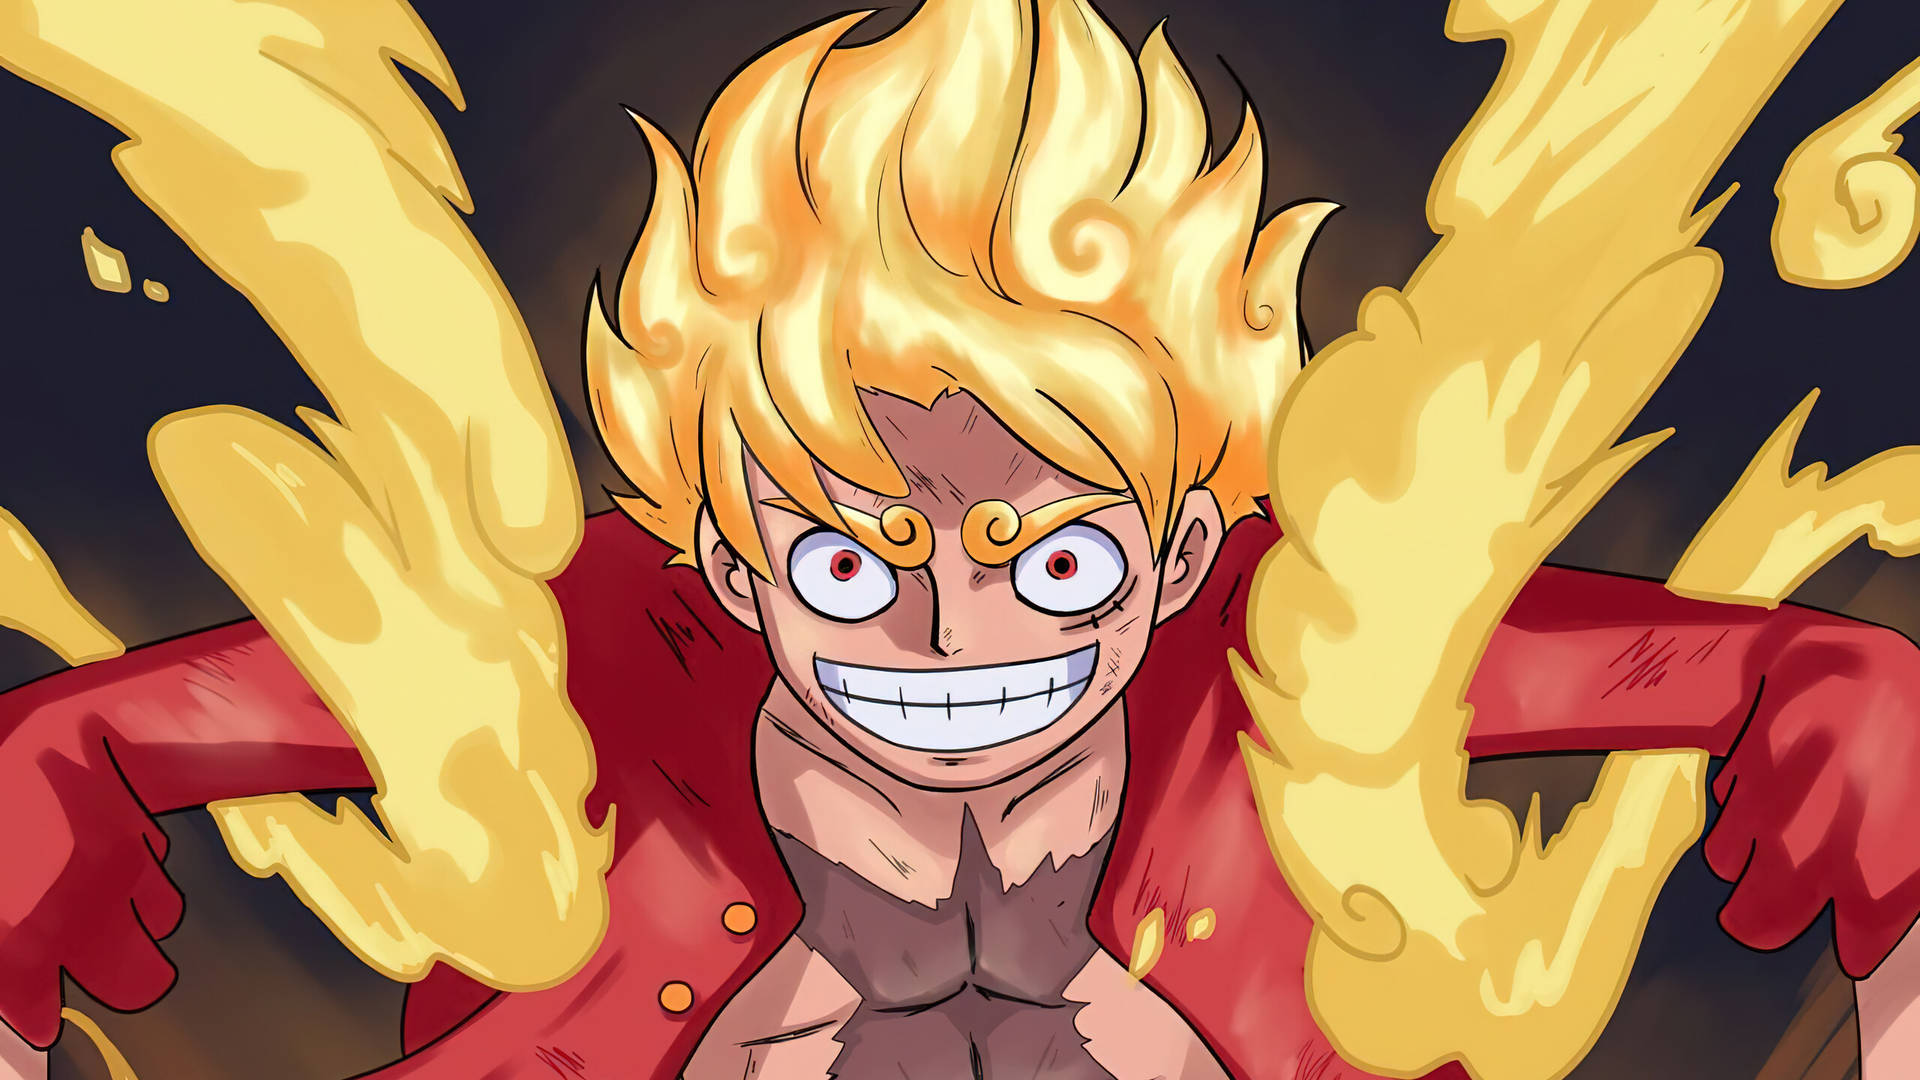 Luffy 4k Burning Orange Hair